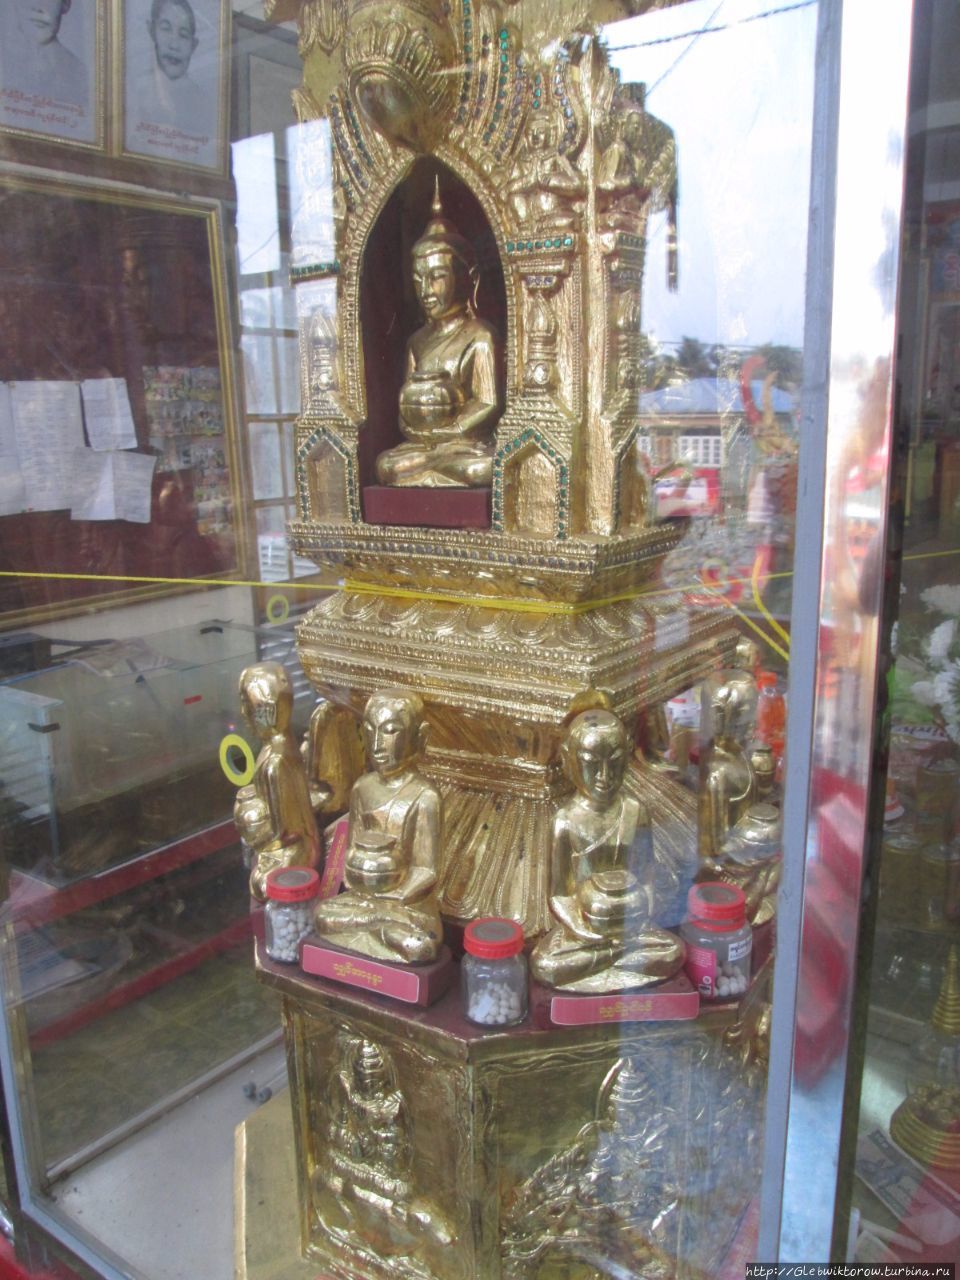 Визит в строящийся китайский храм Патейн, Мьянма